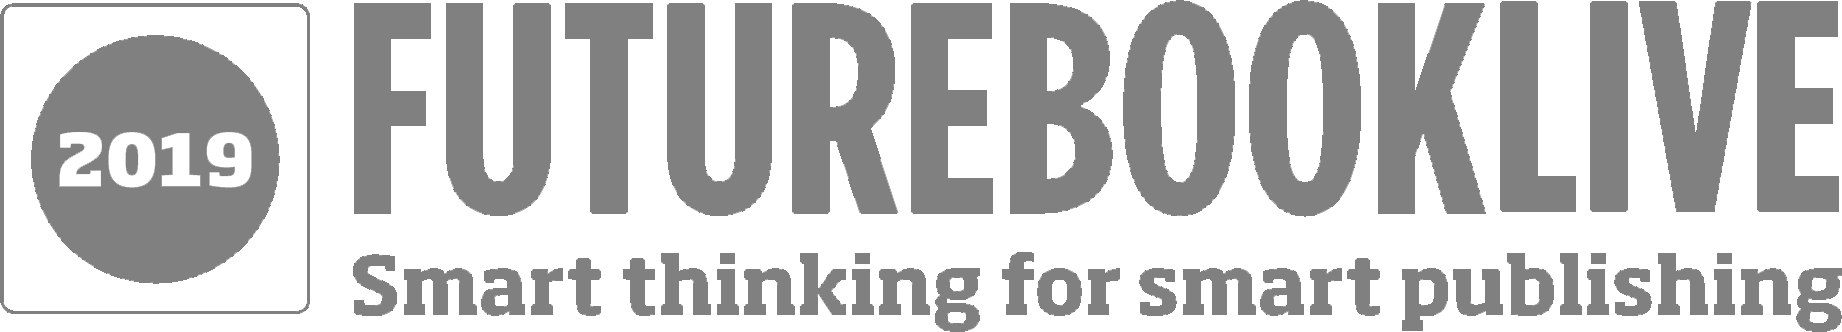 Futurebook Logo